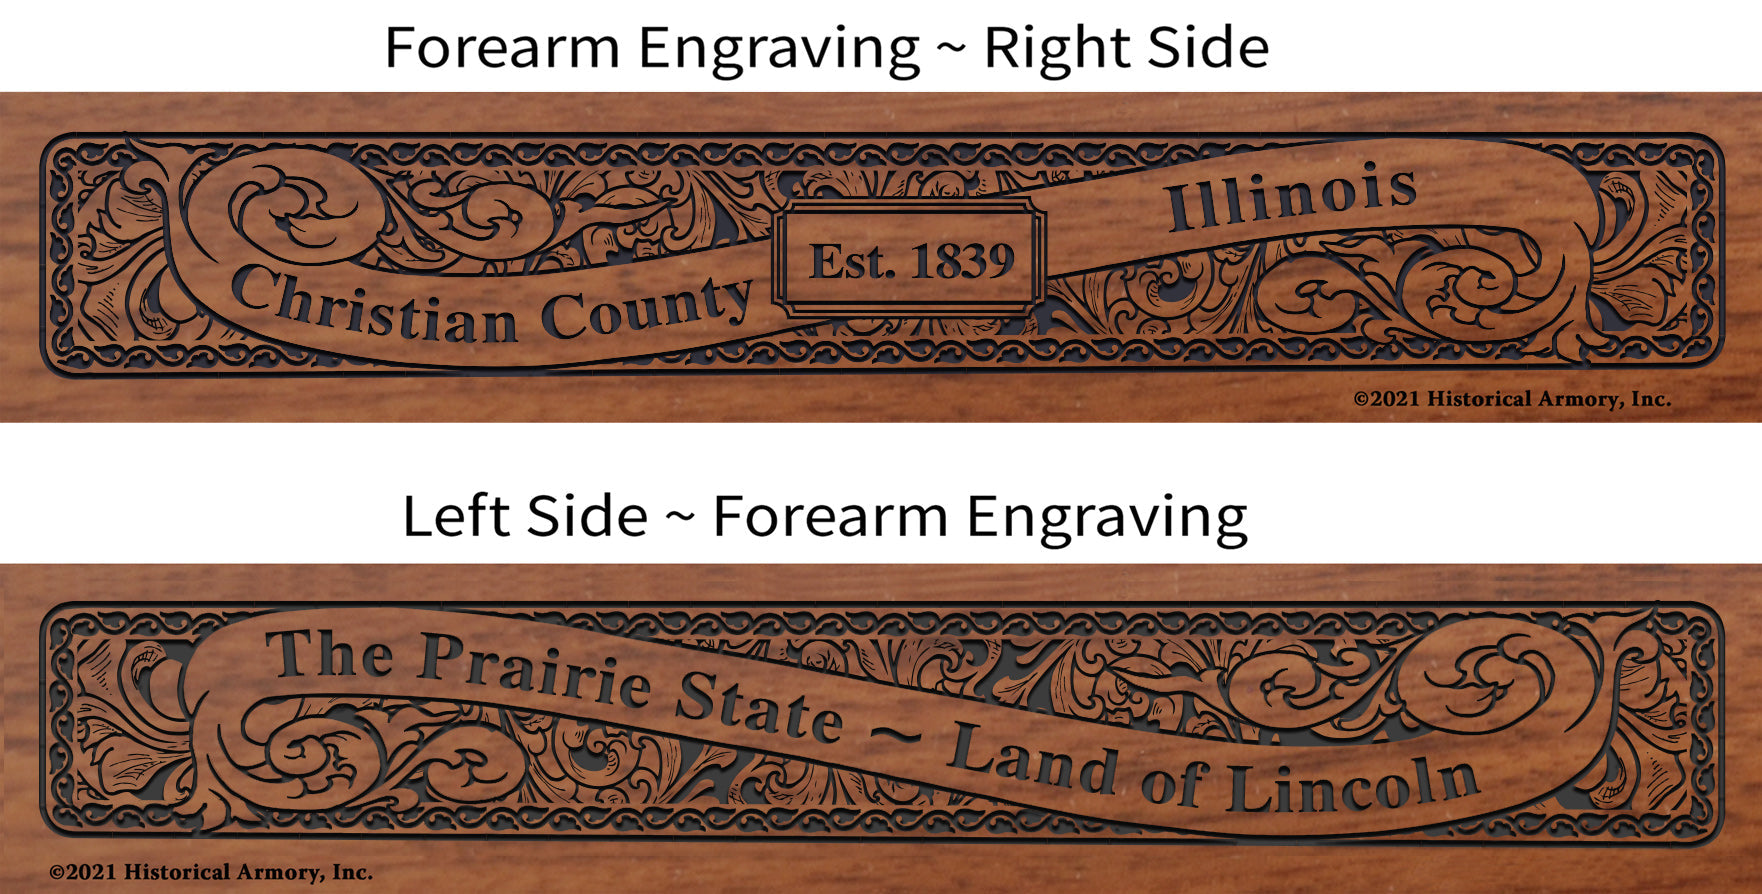 Christian County Illinois Establishment and Motto History Engraved Rifle Forearm